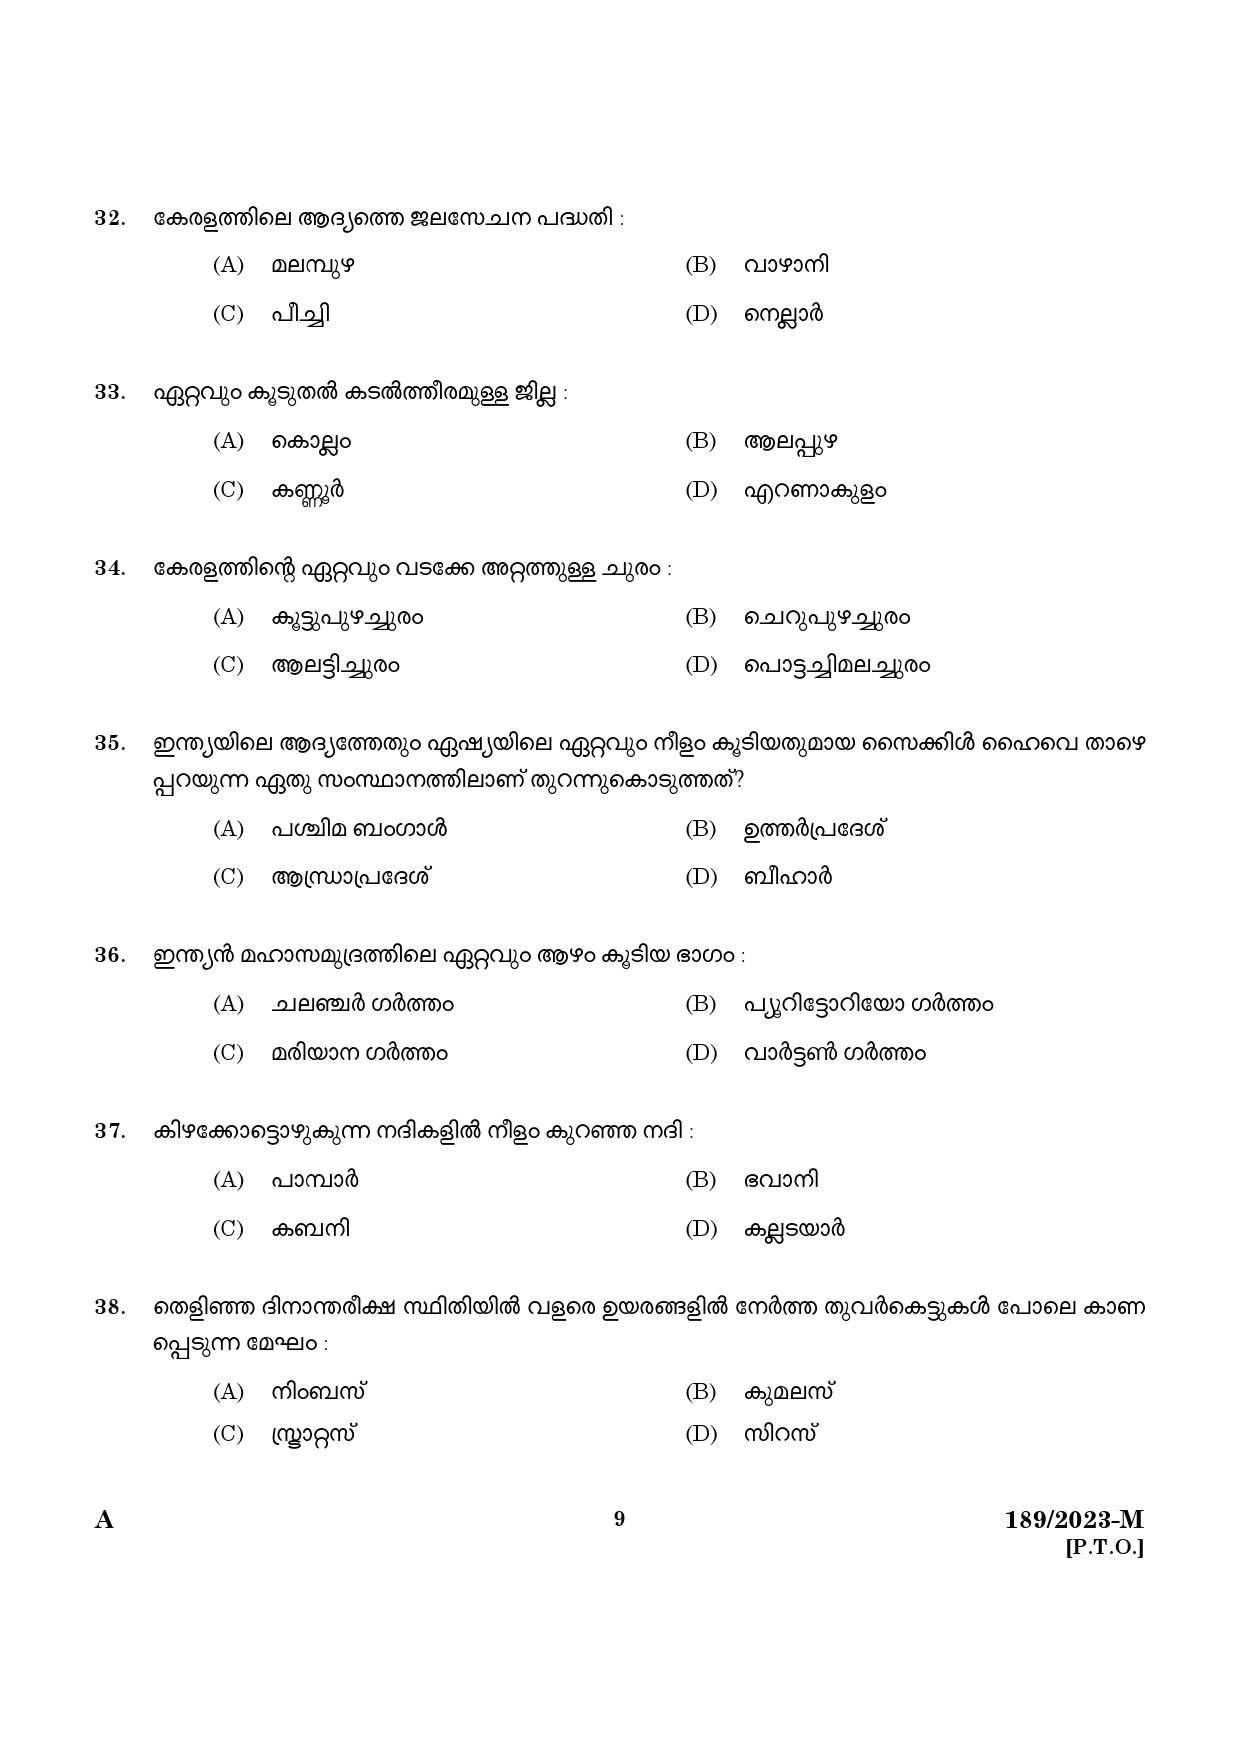 KPSC LGS Malayalam Exam 2023 Code 1892023 M 7